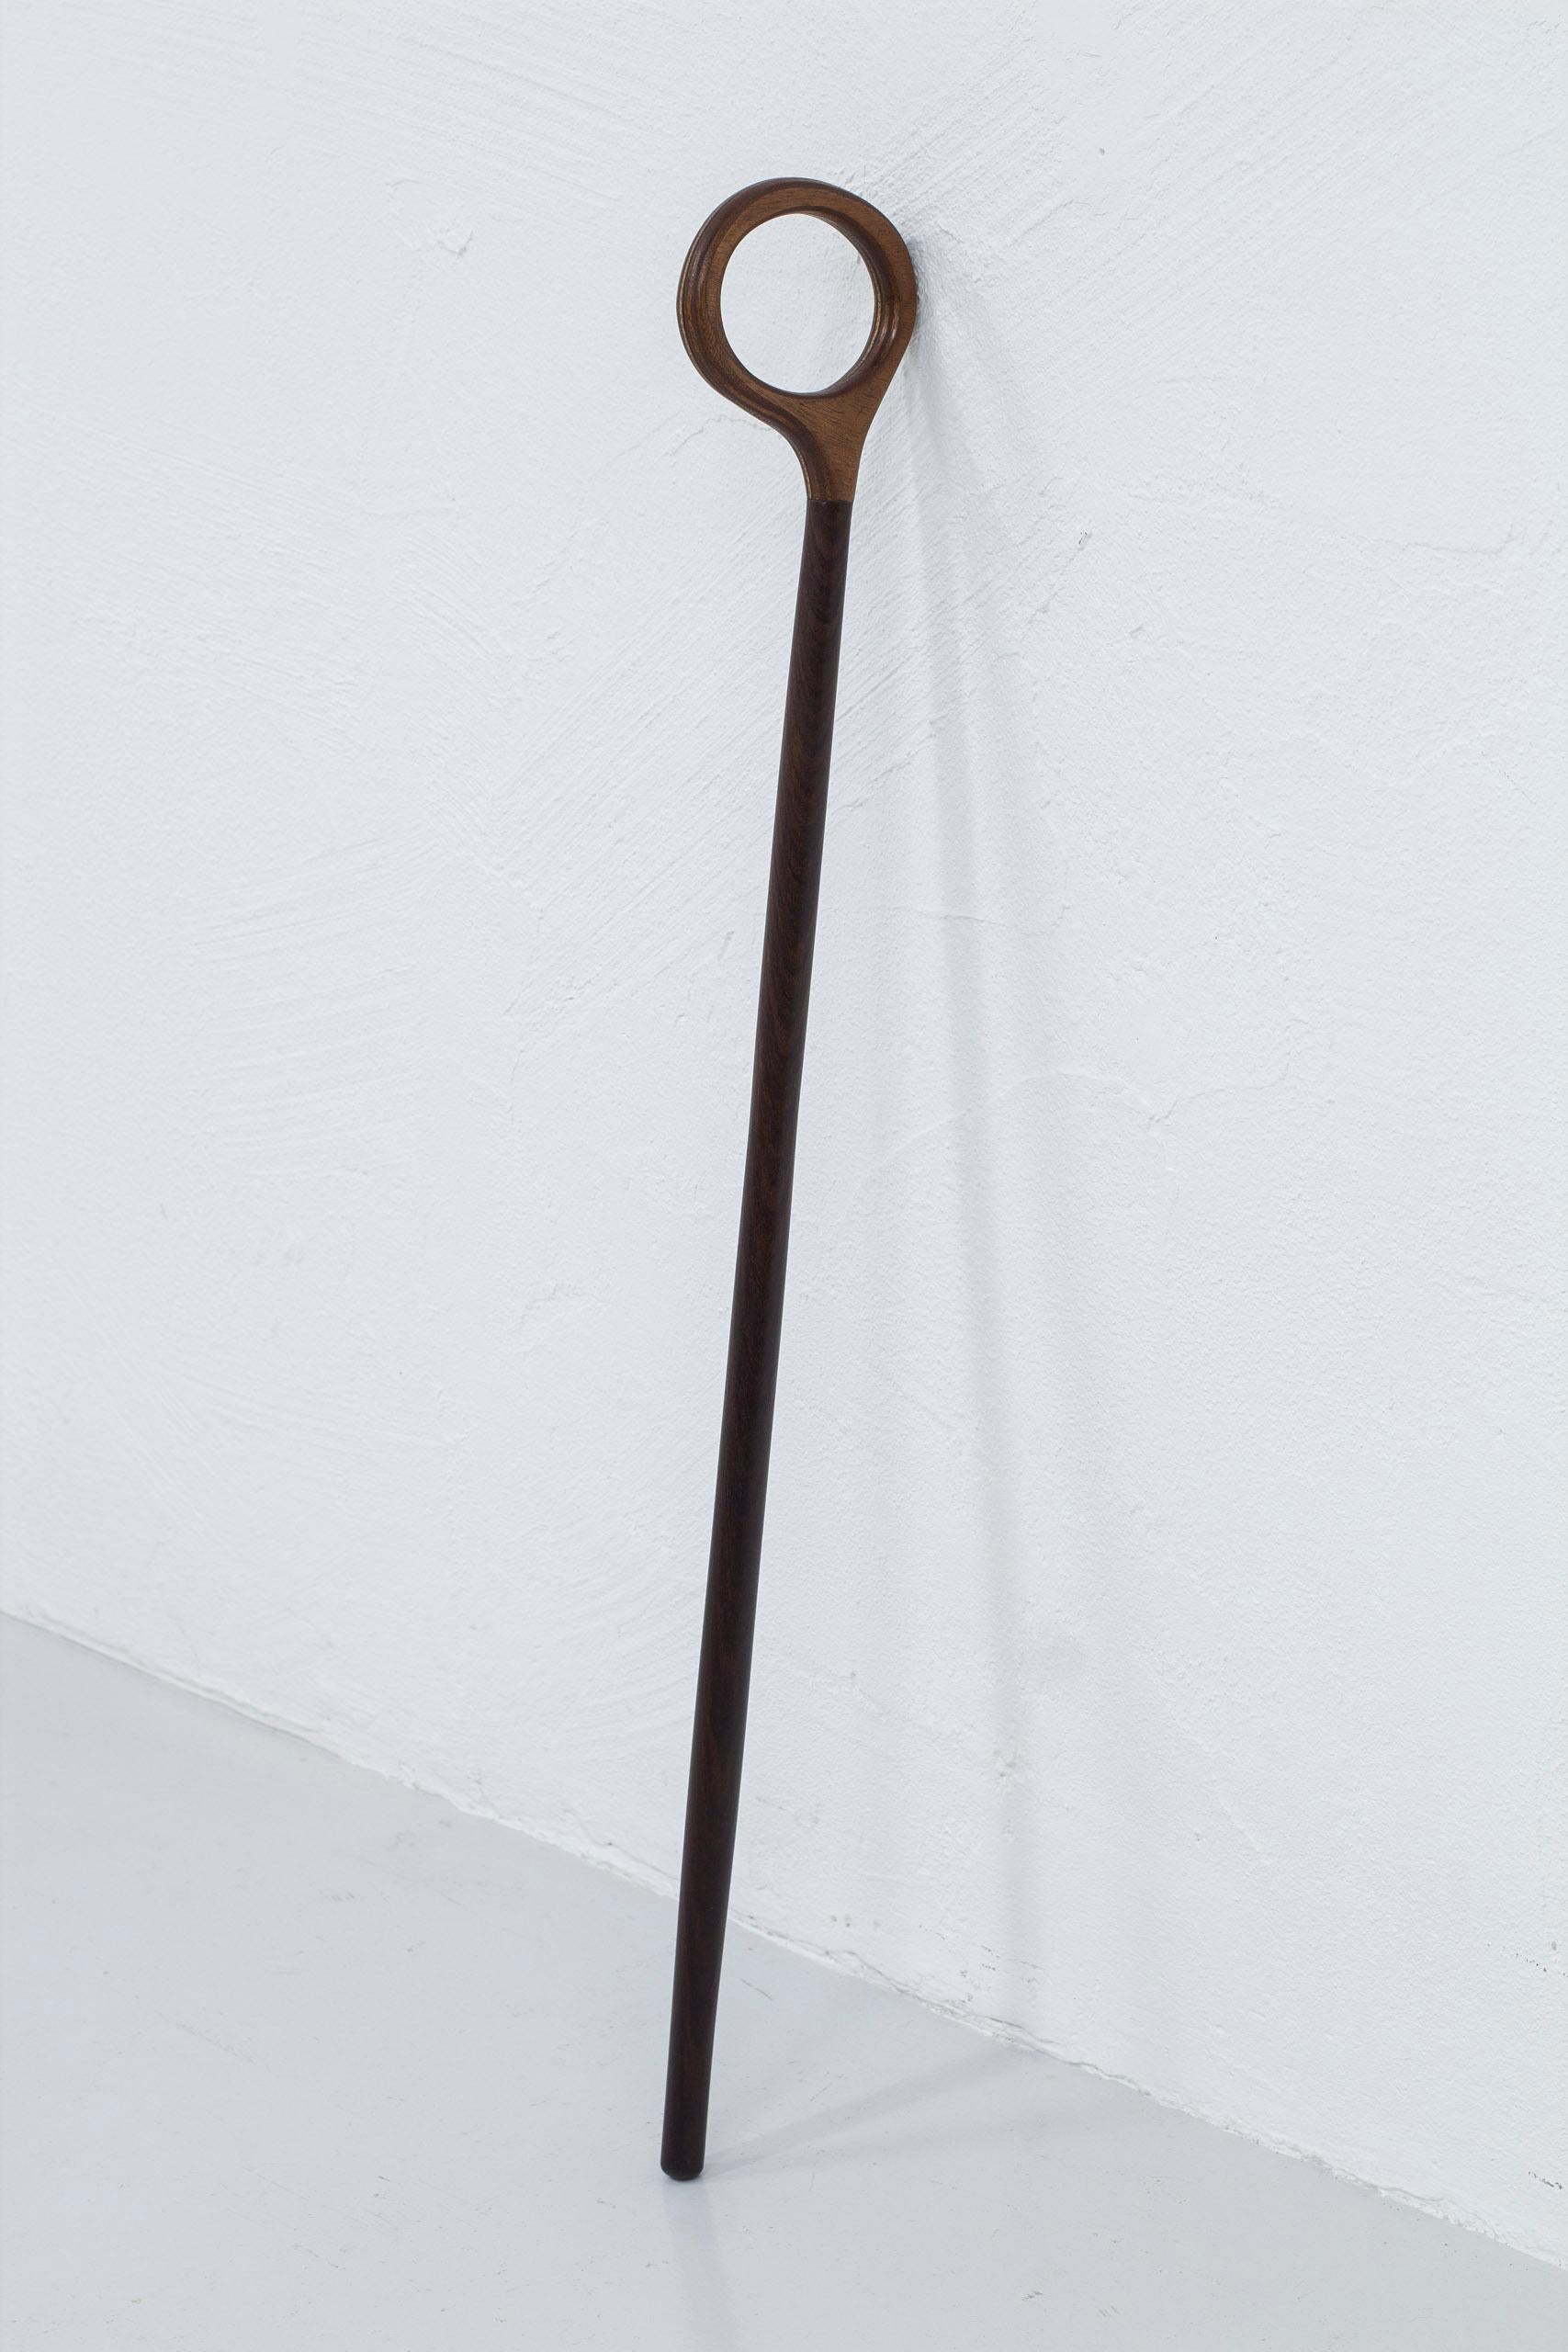 Walking Stick / Cane by Nanna & Jørgen Ditzel, by Kold's Savvaerk, Denmark For Sale